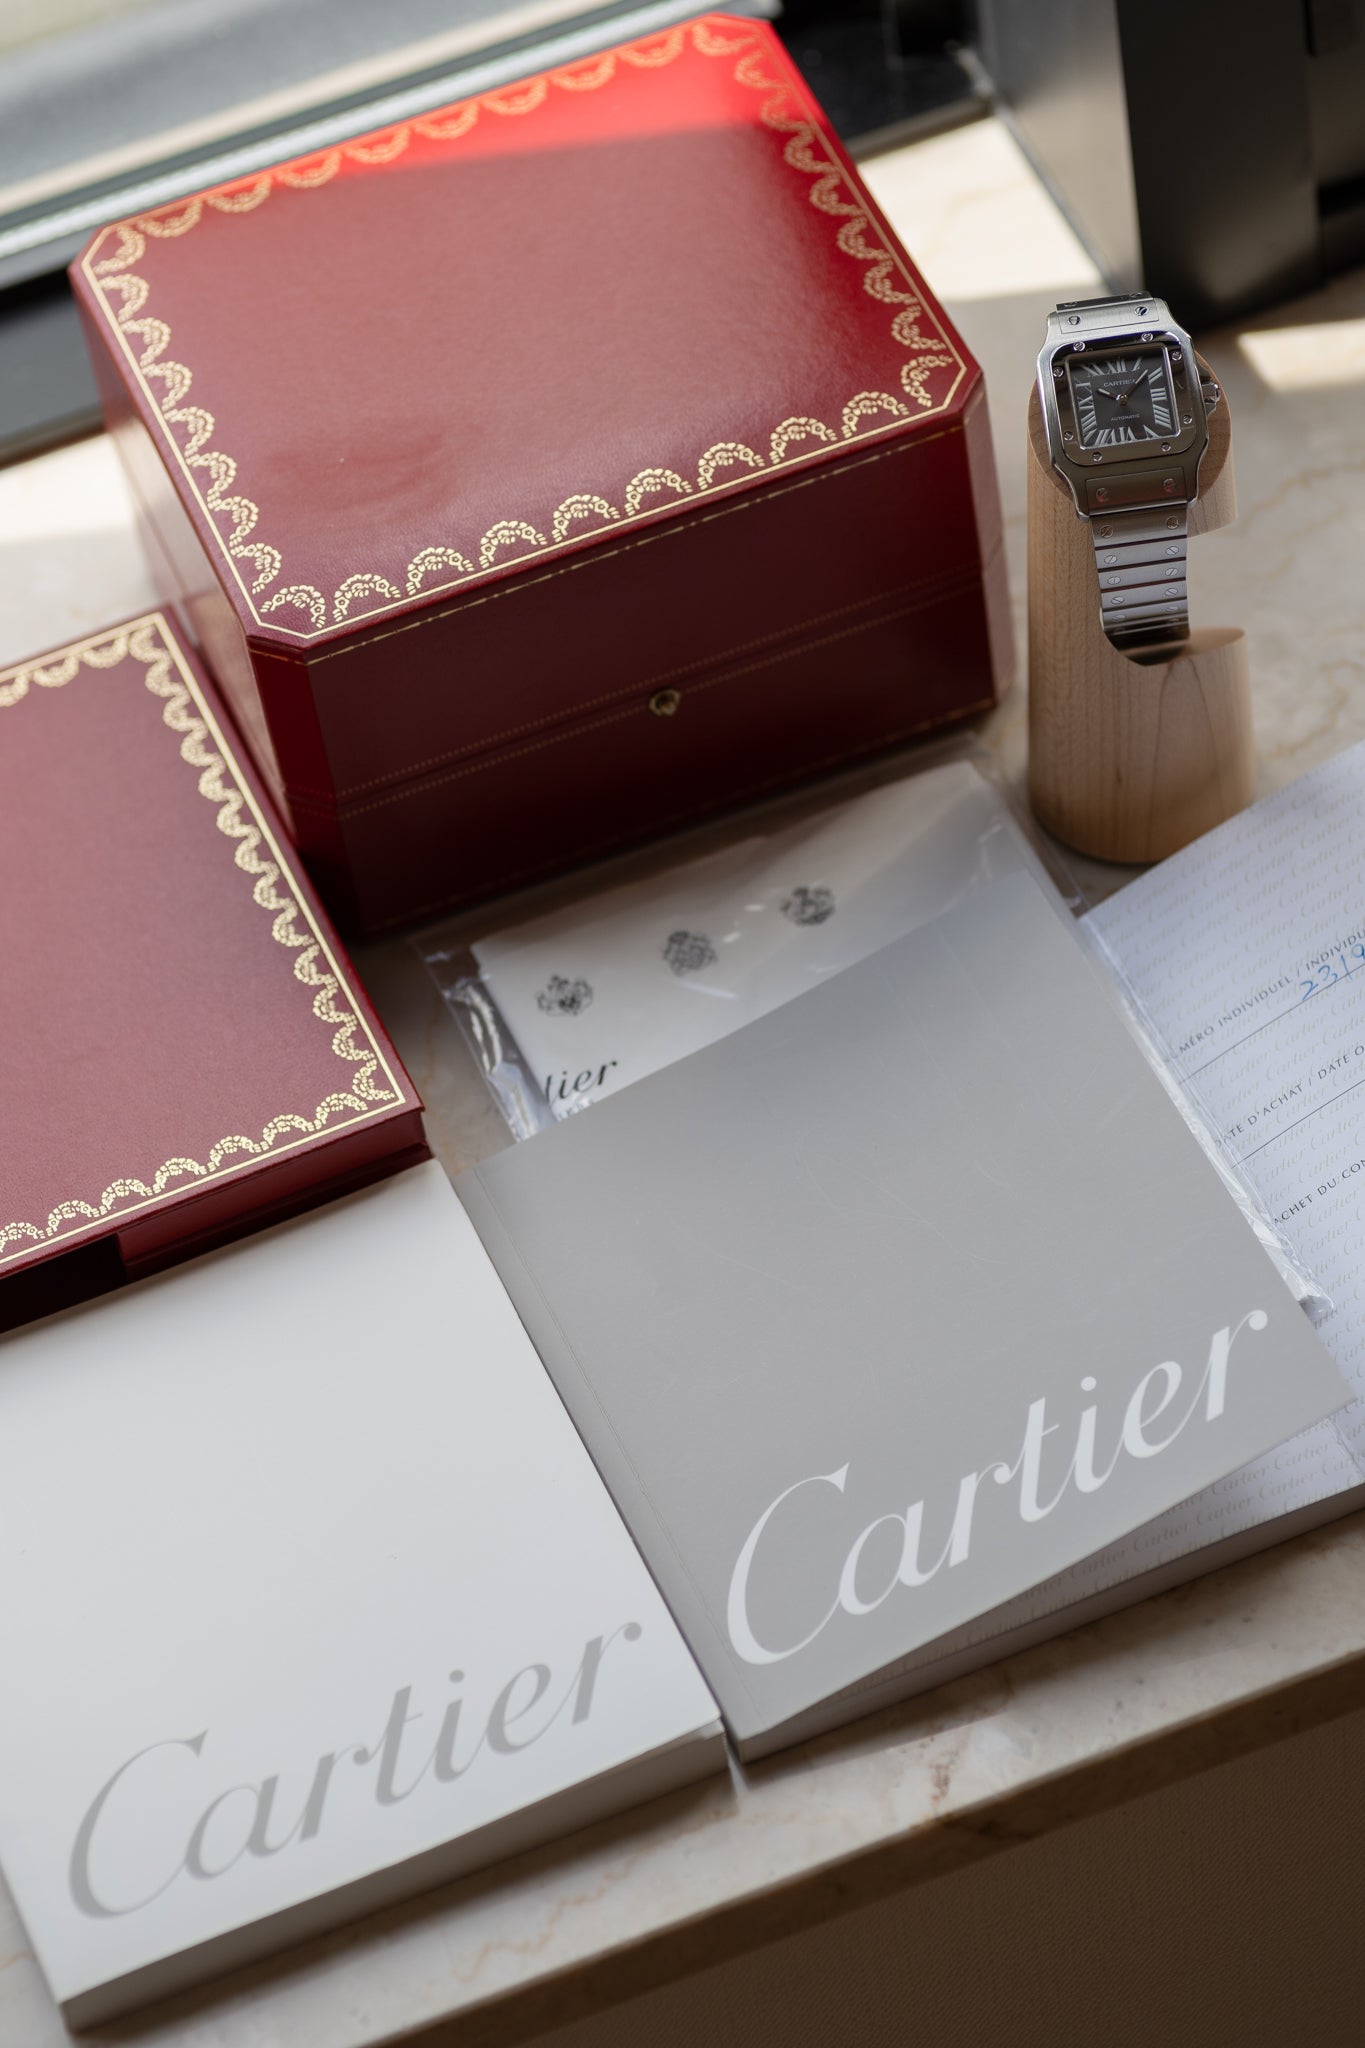 Cartier Santos Galbee LM ref 2319 SIHH Limited Edition